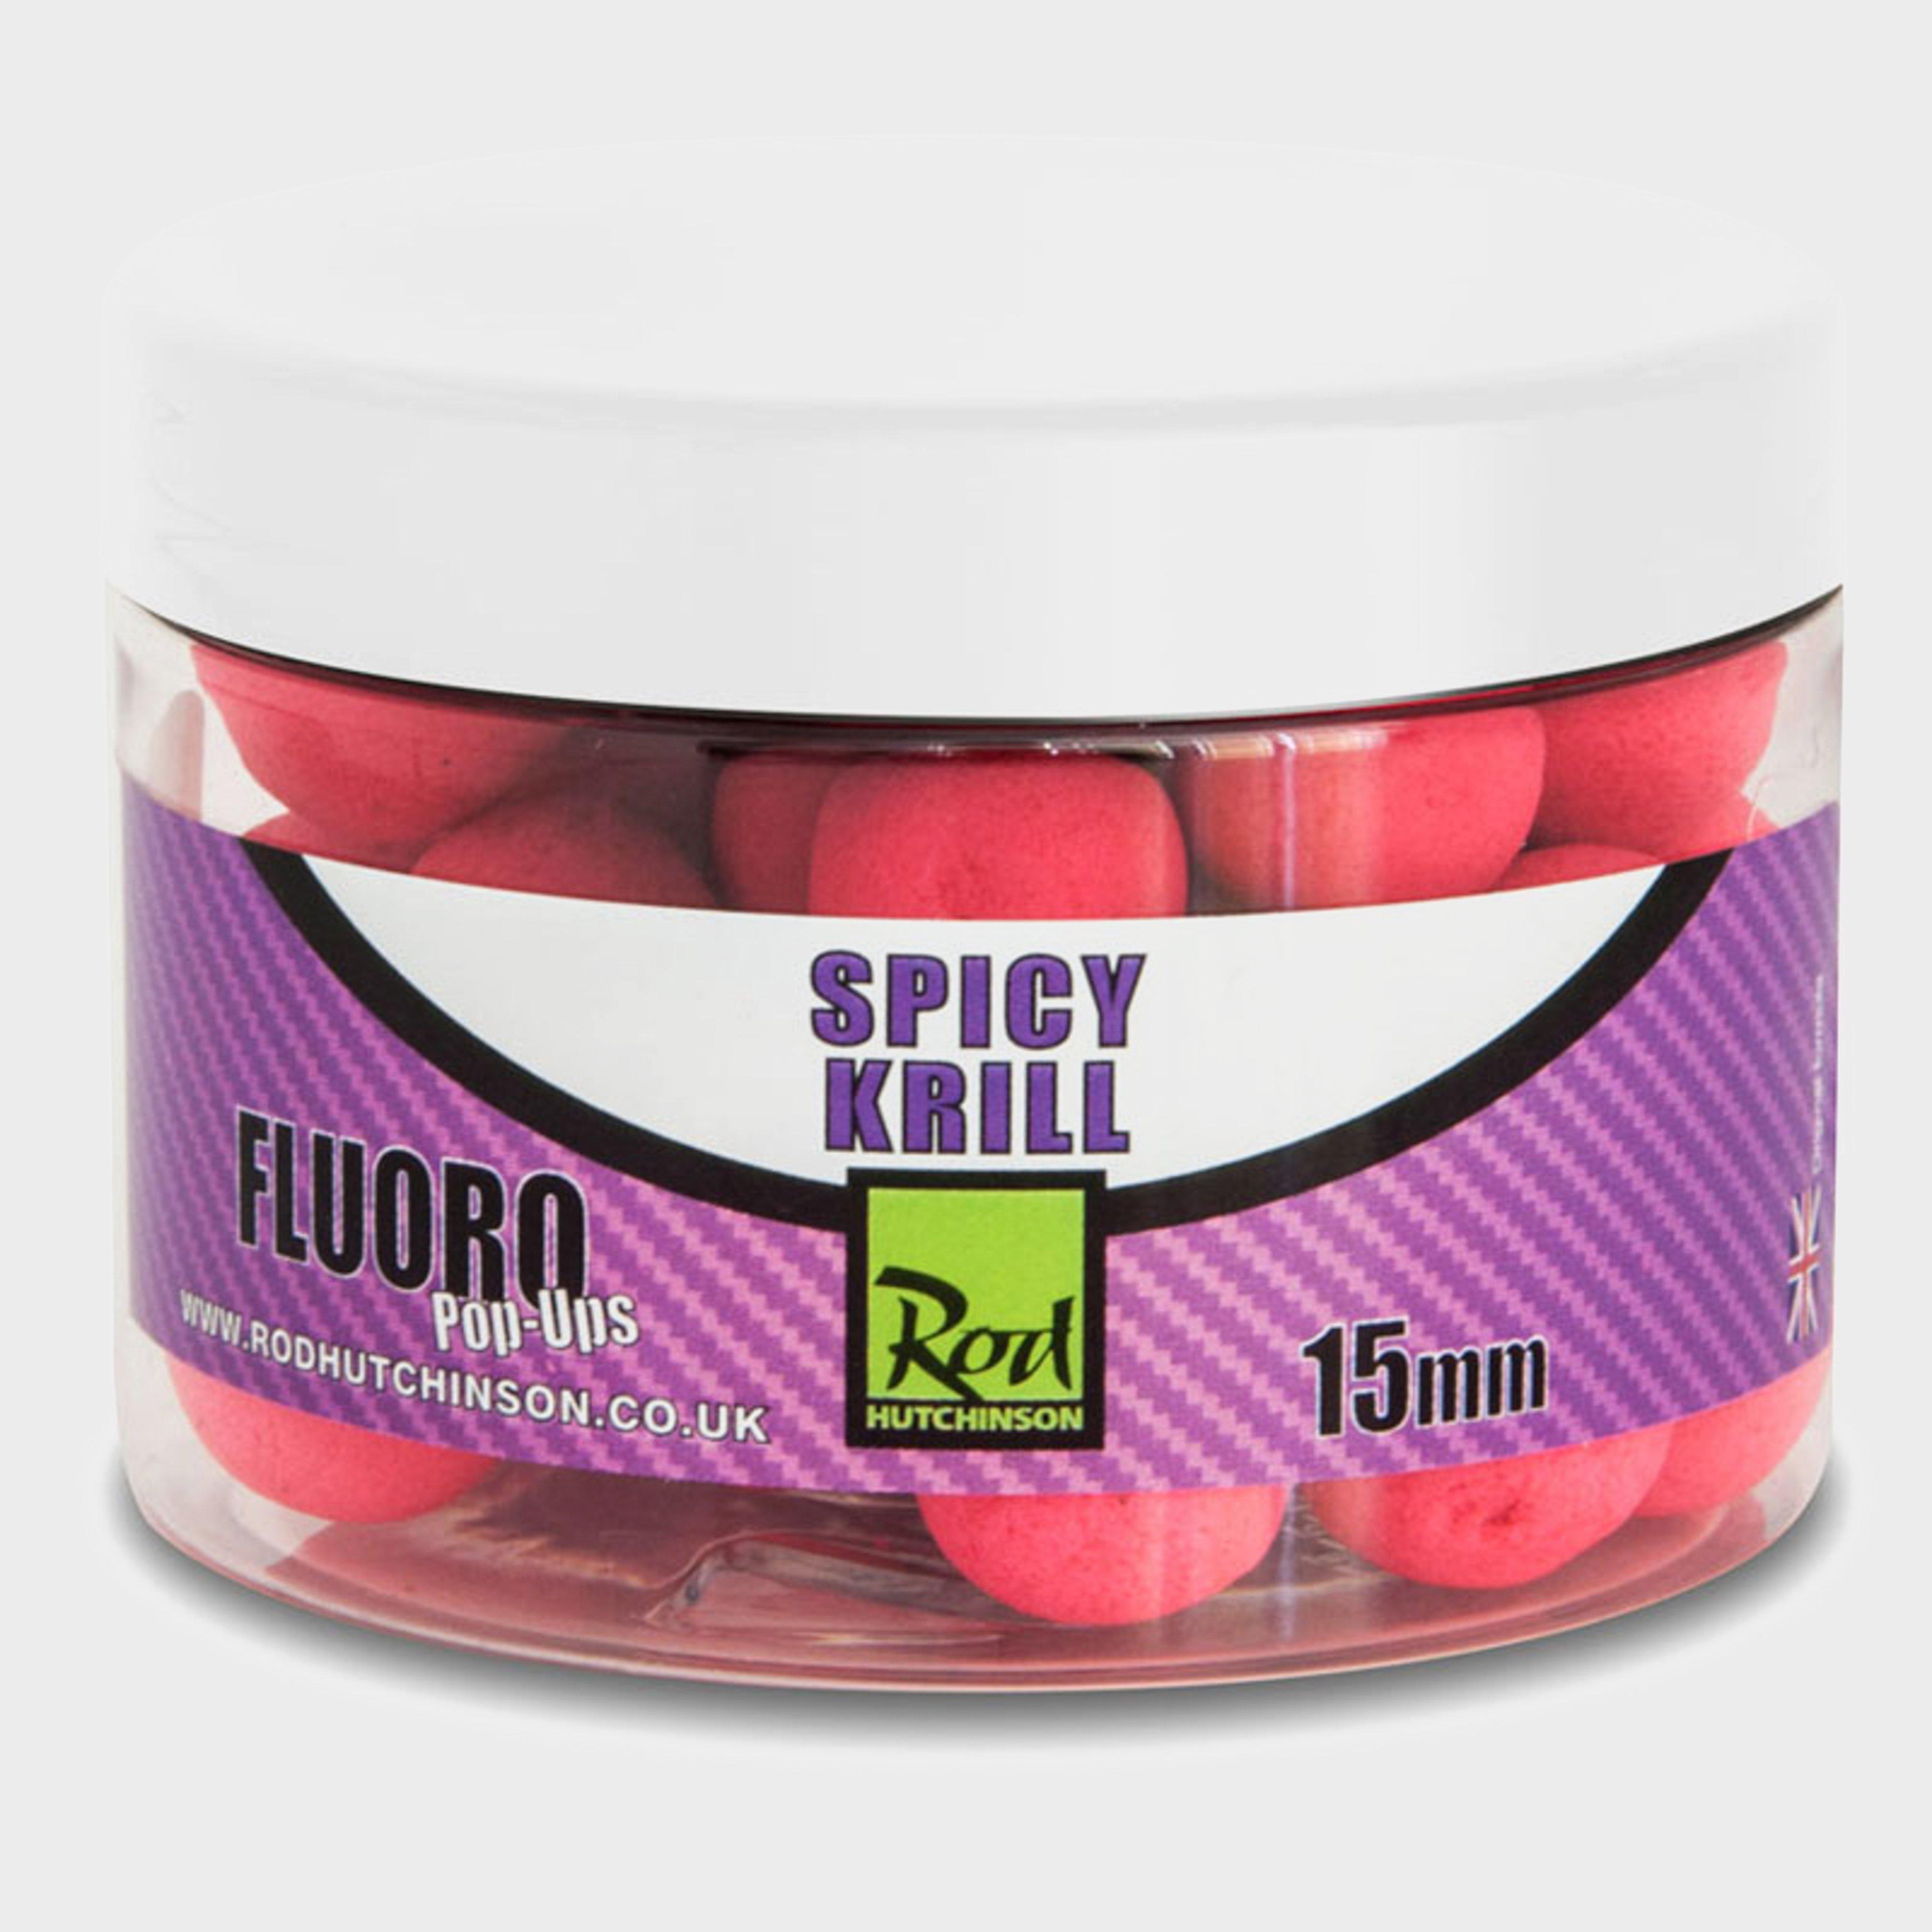 R Hutchinson Fluoro Pop Ups 15mm  Spicy Krill - Red/kril  Red/kril